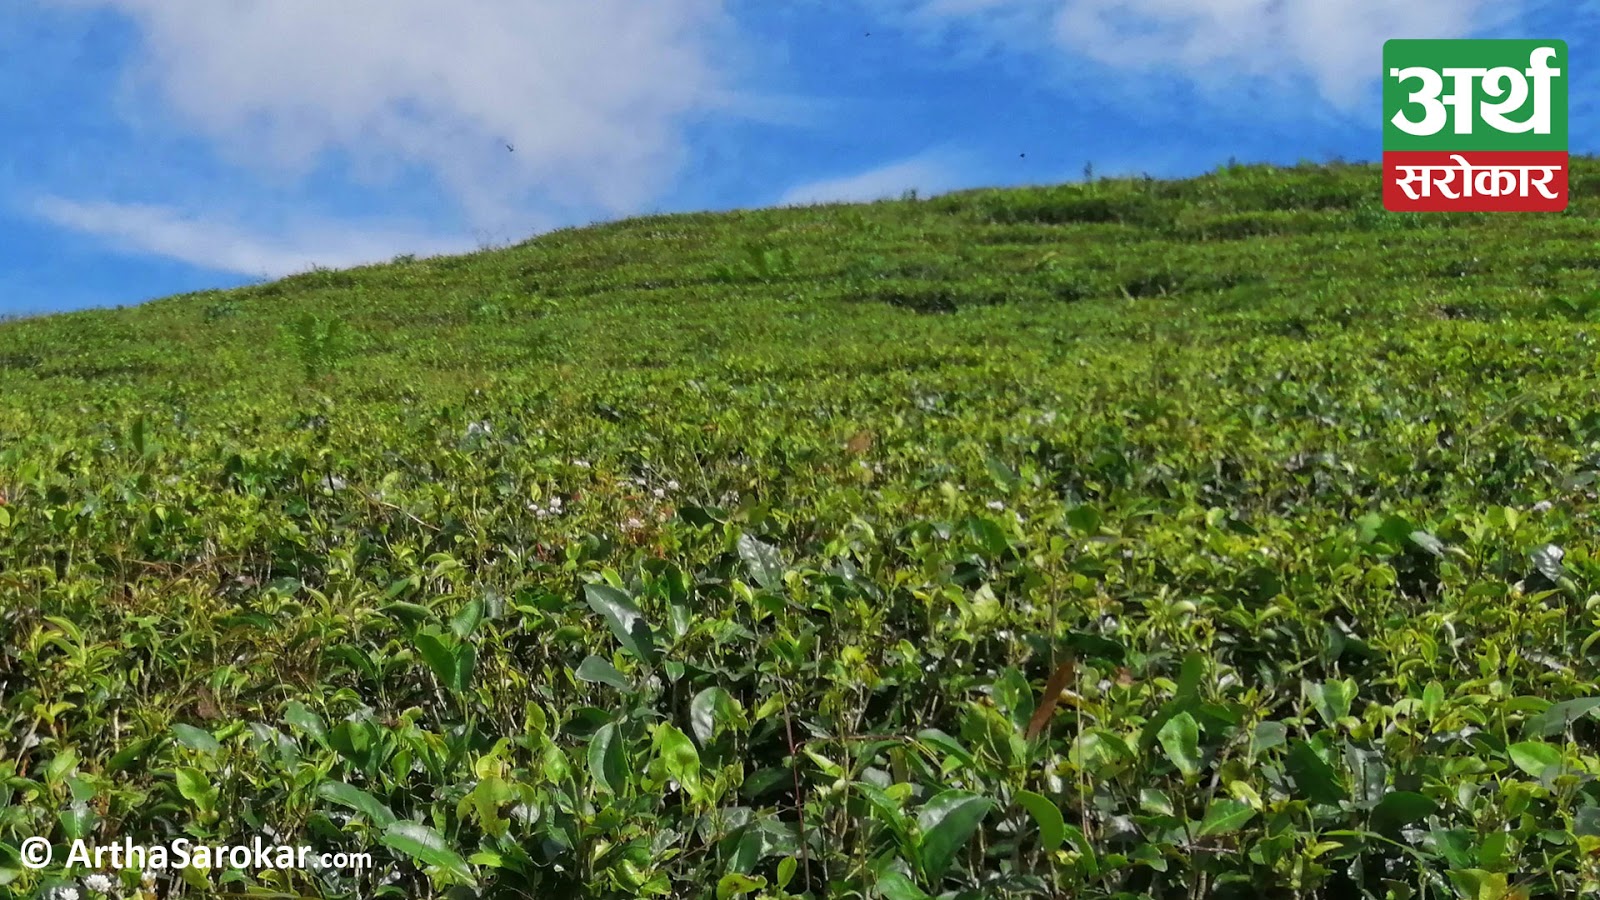 ‘Provide tea price as per municipal standards’